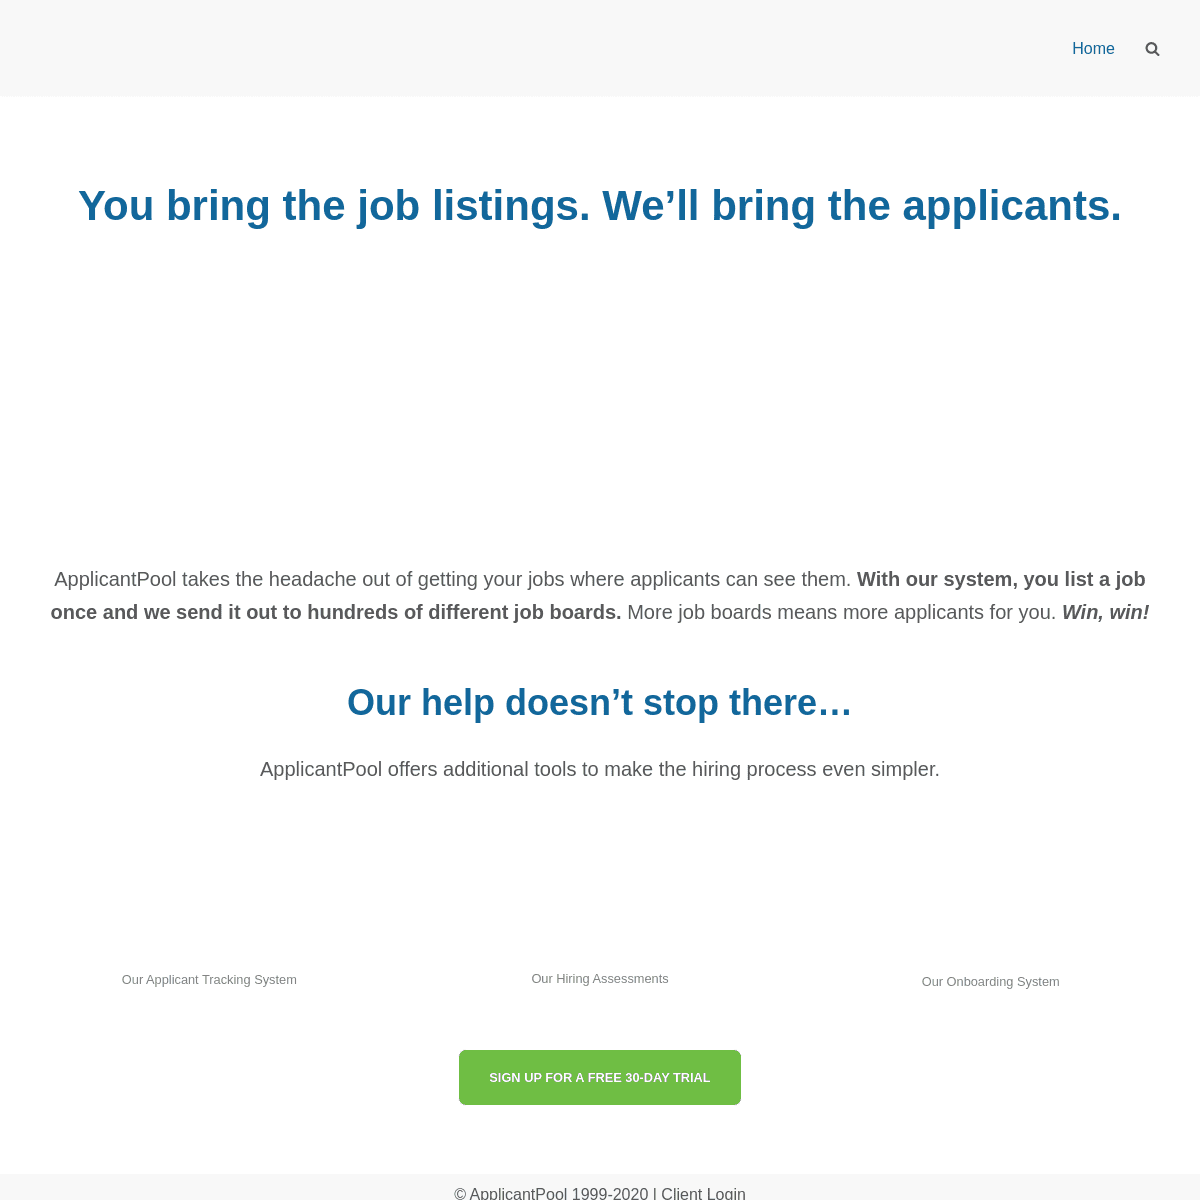 A complete backup of https://applicantpool.com